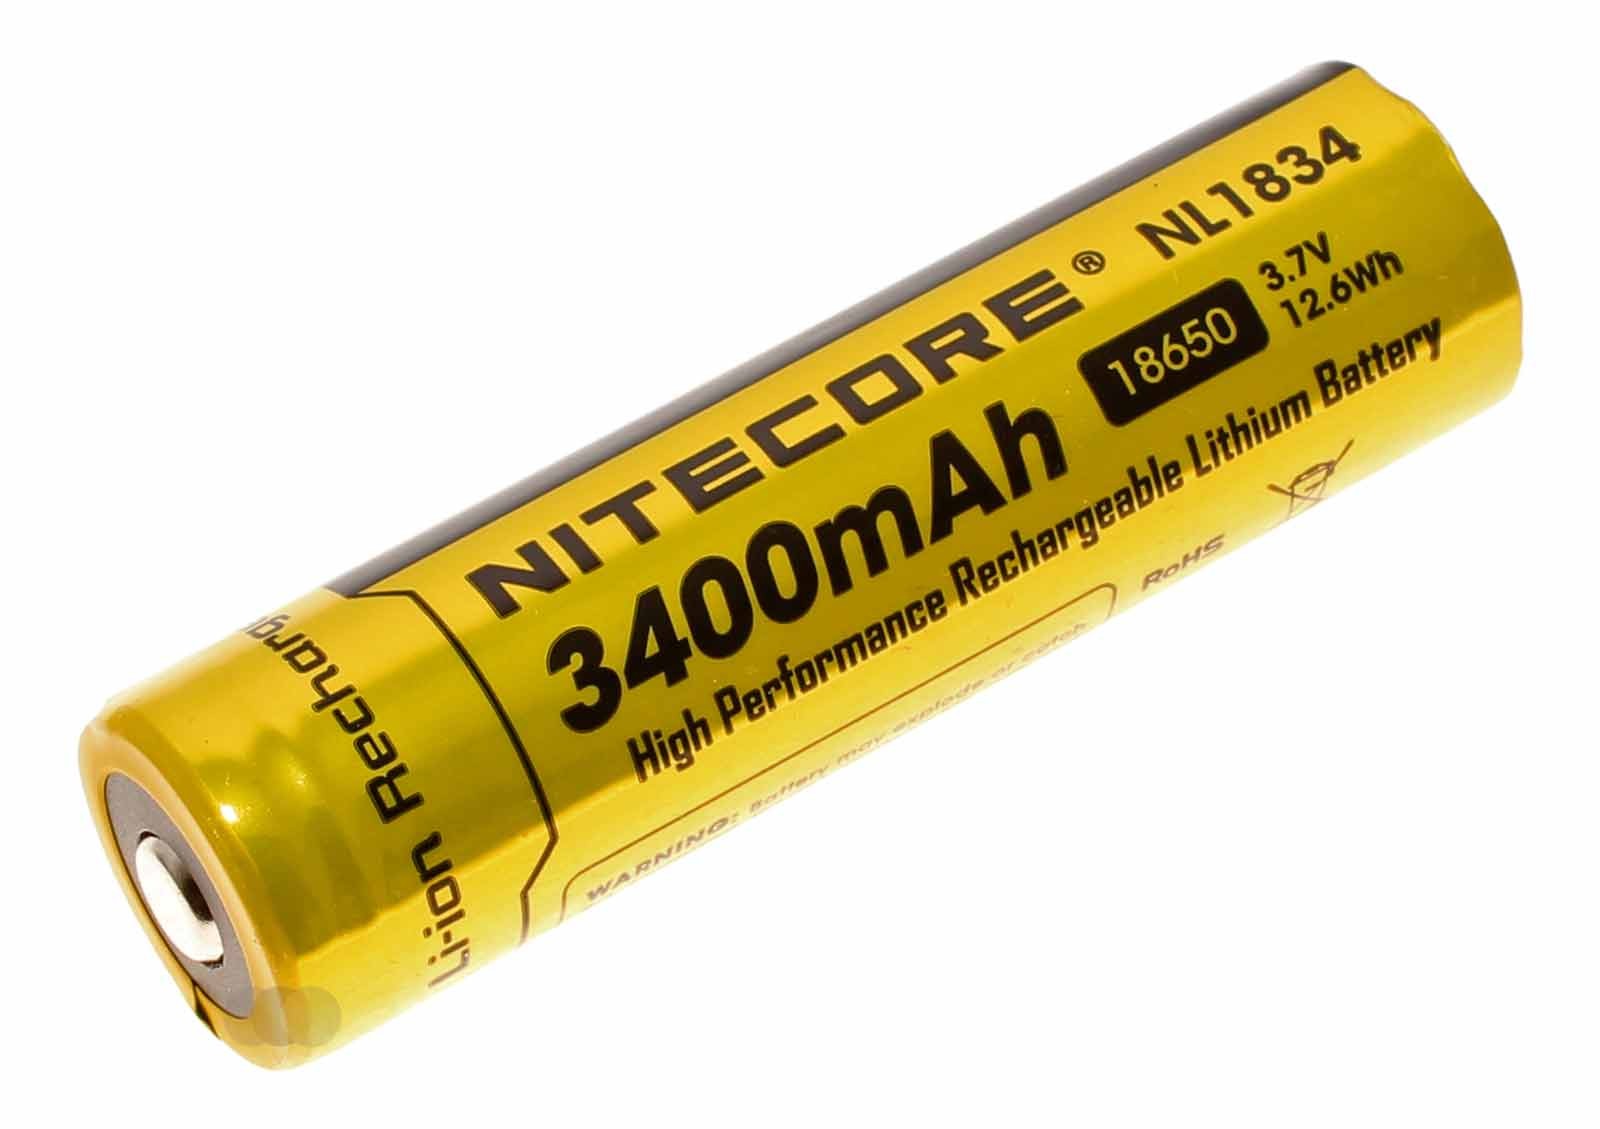 NiteCore NL1834 18650 Li-Ion spezial Akku 3,7 Volt und 3400mAh Kapazität, B-Ware ohne Blisterverpackung